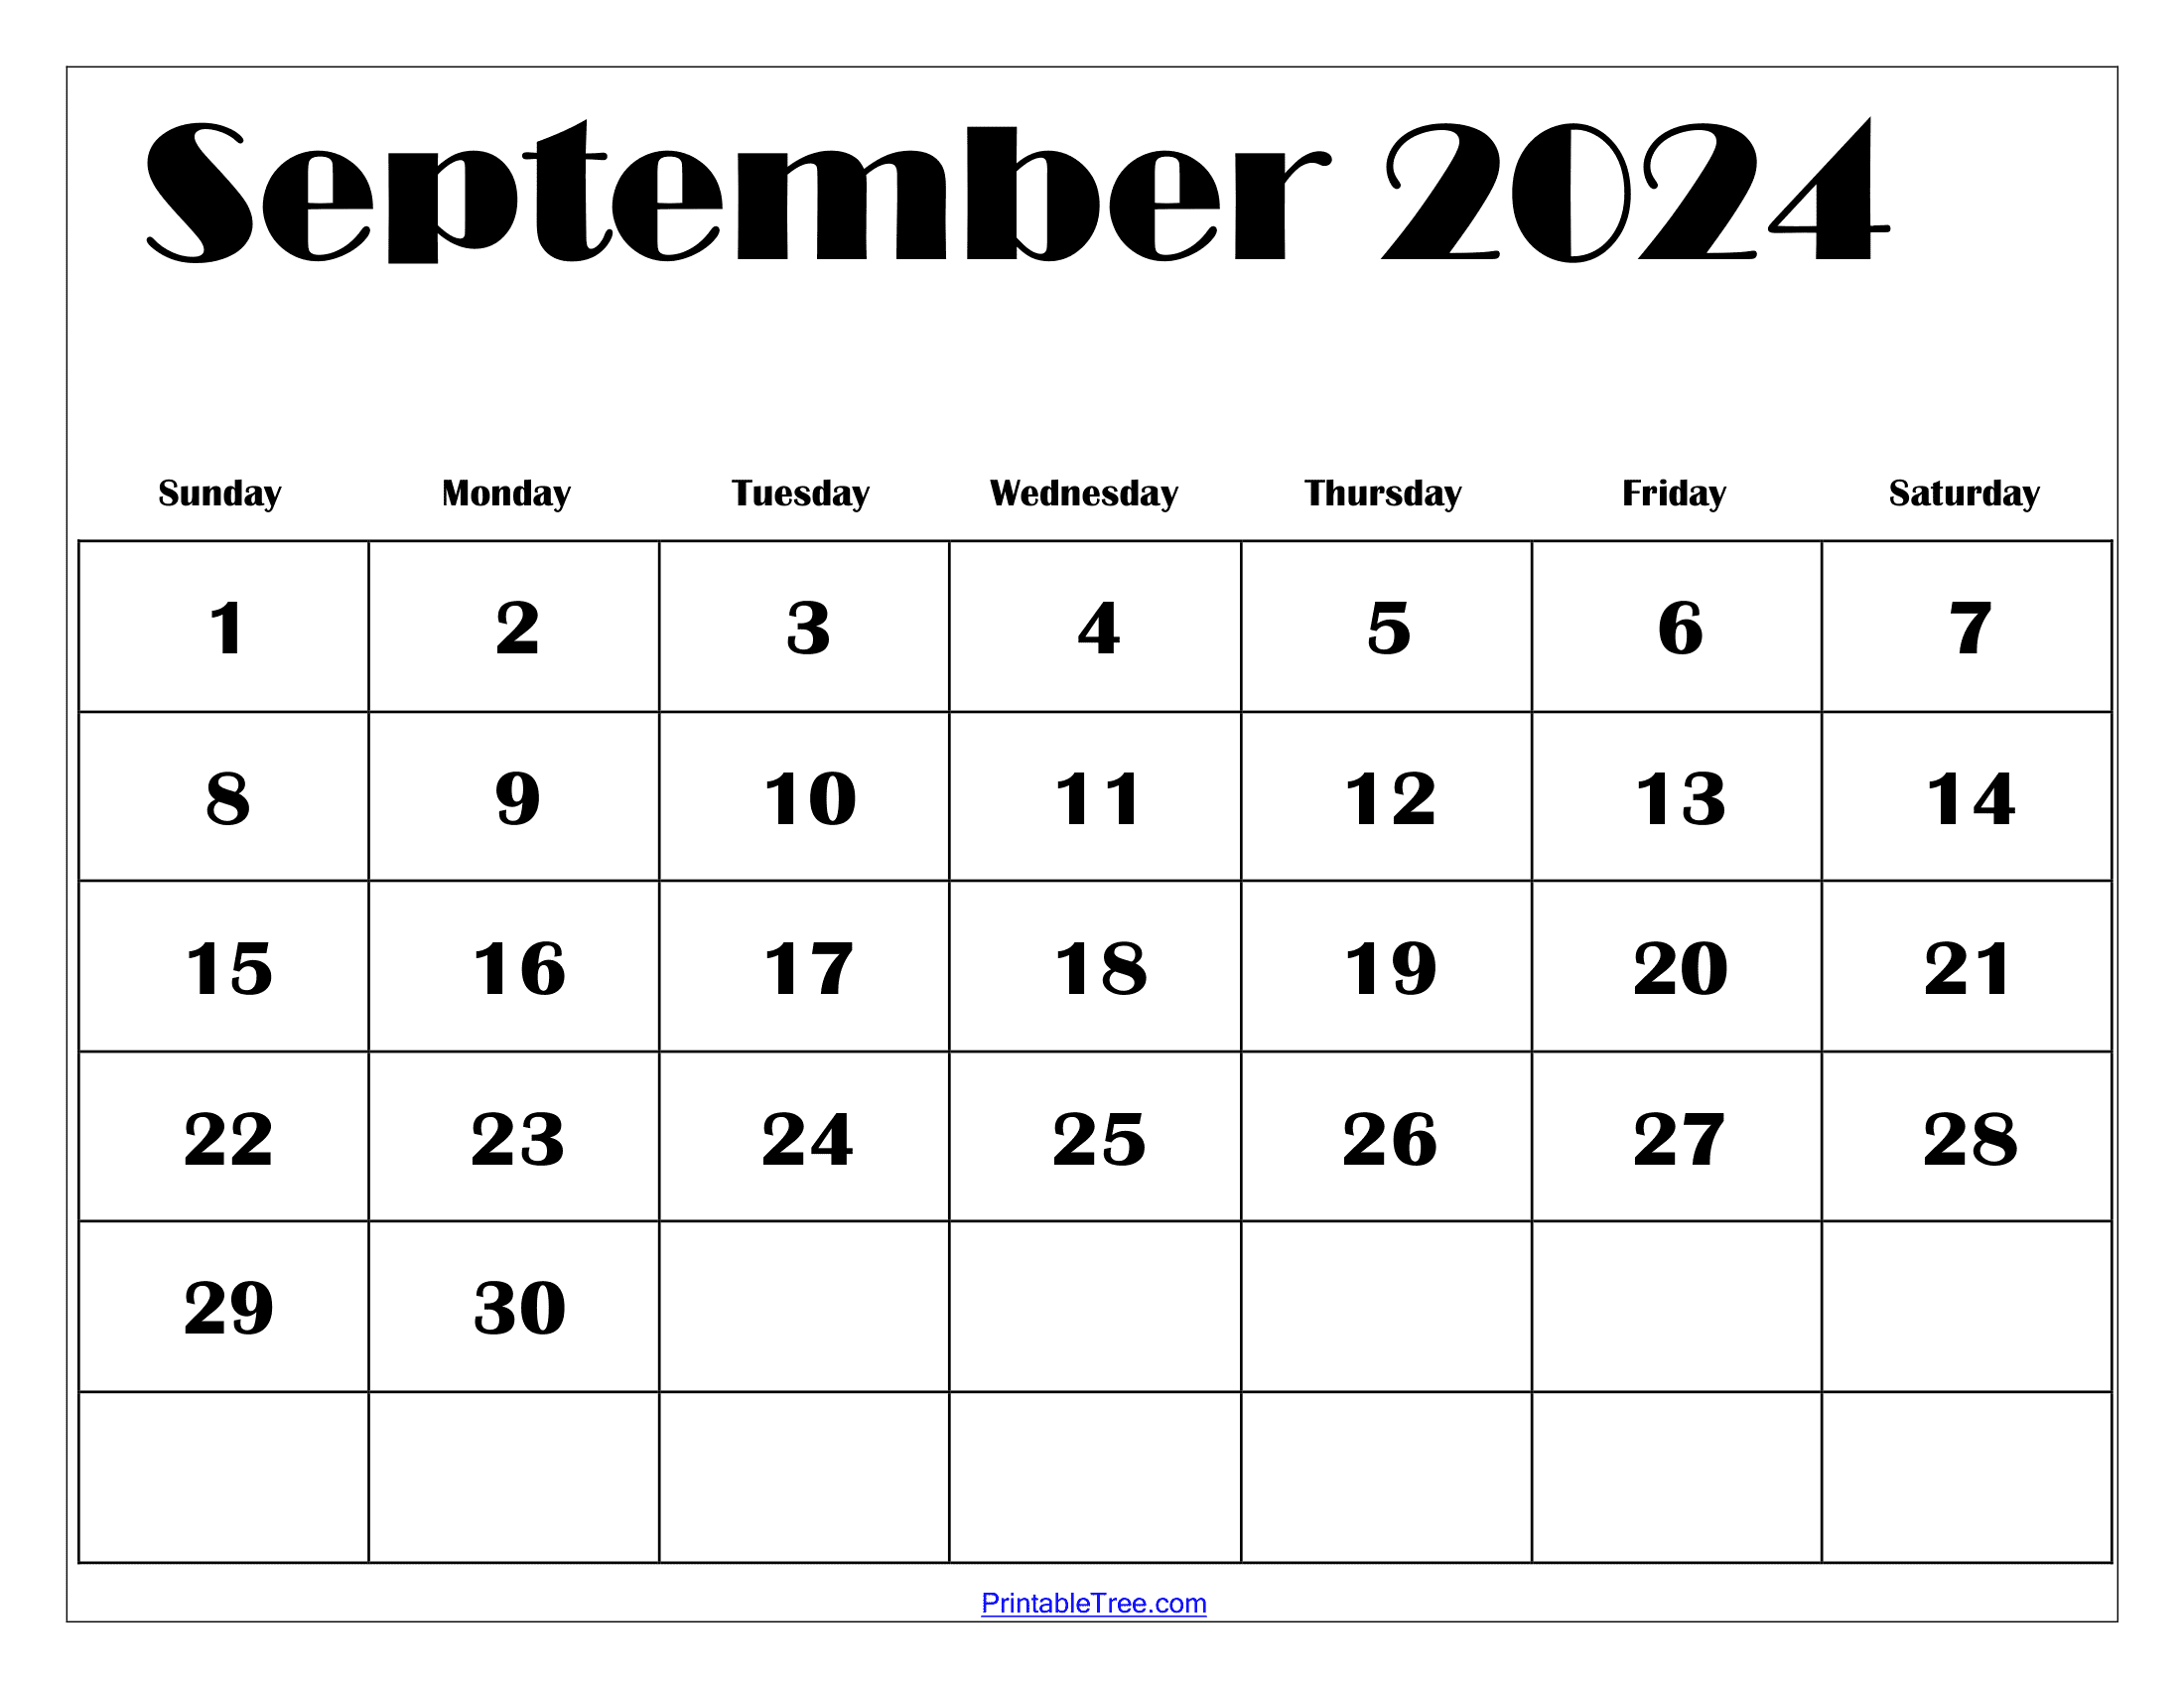 September 2024 Calendar Printable Pdf With Holidays for Printable Calendar October 2023 To September 2024